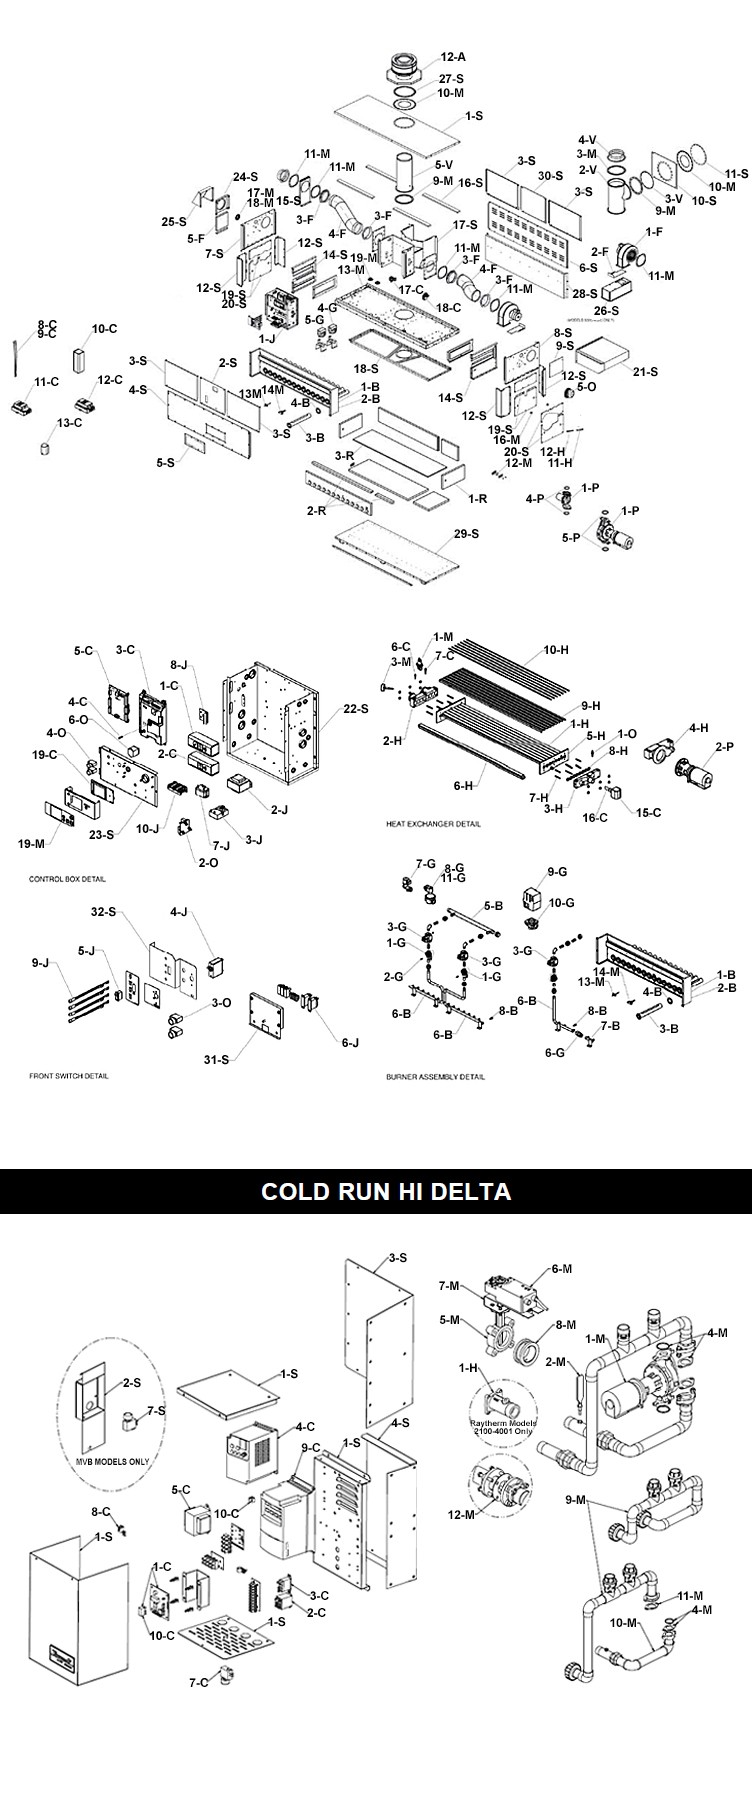 Raypak HI Delta Cold Run P-502C Commercial Indoor-Outdoor Swimming Pool Heater | Propane Gas 500,000 BTUH | 016095 Parts Schematic